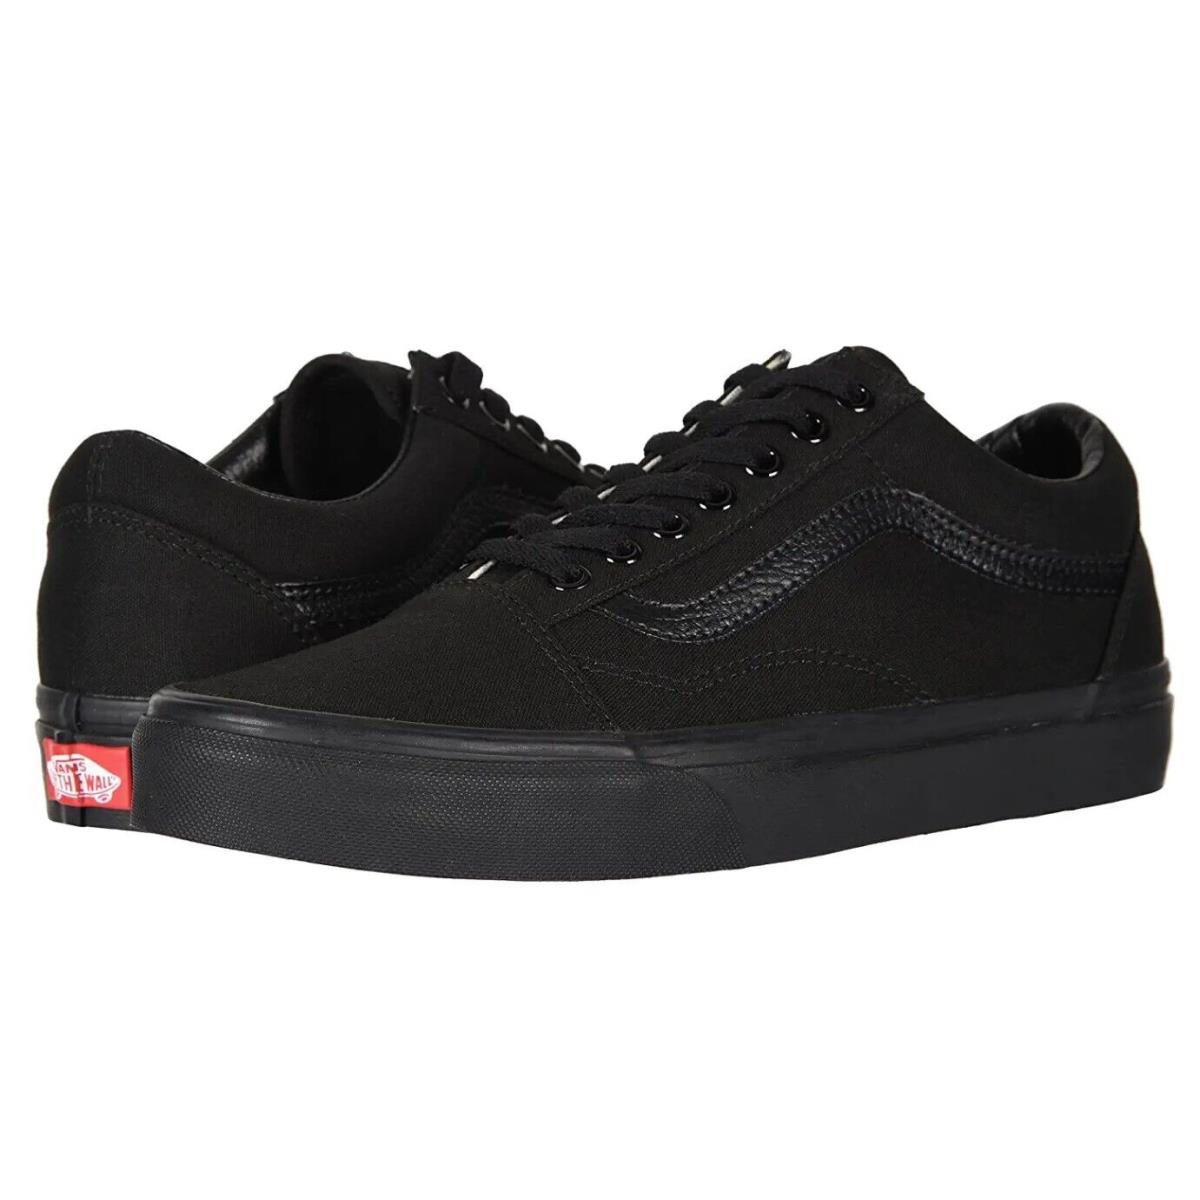 Vans Unisex - Old Skool Skate Shoe - Black/black - VN000D3HBKA